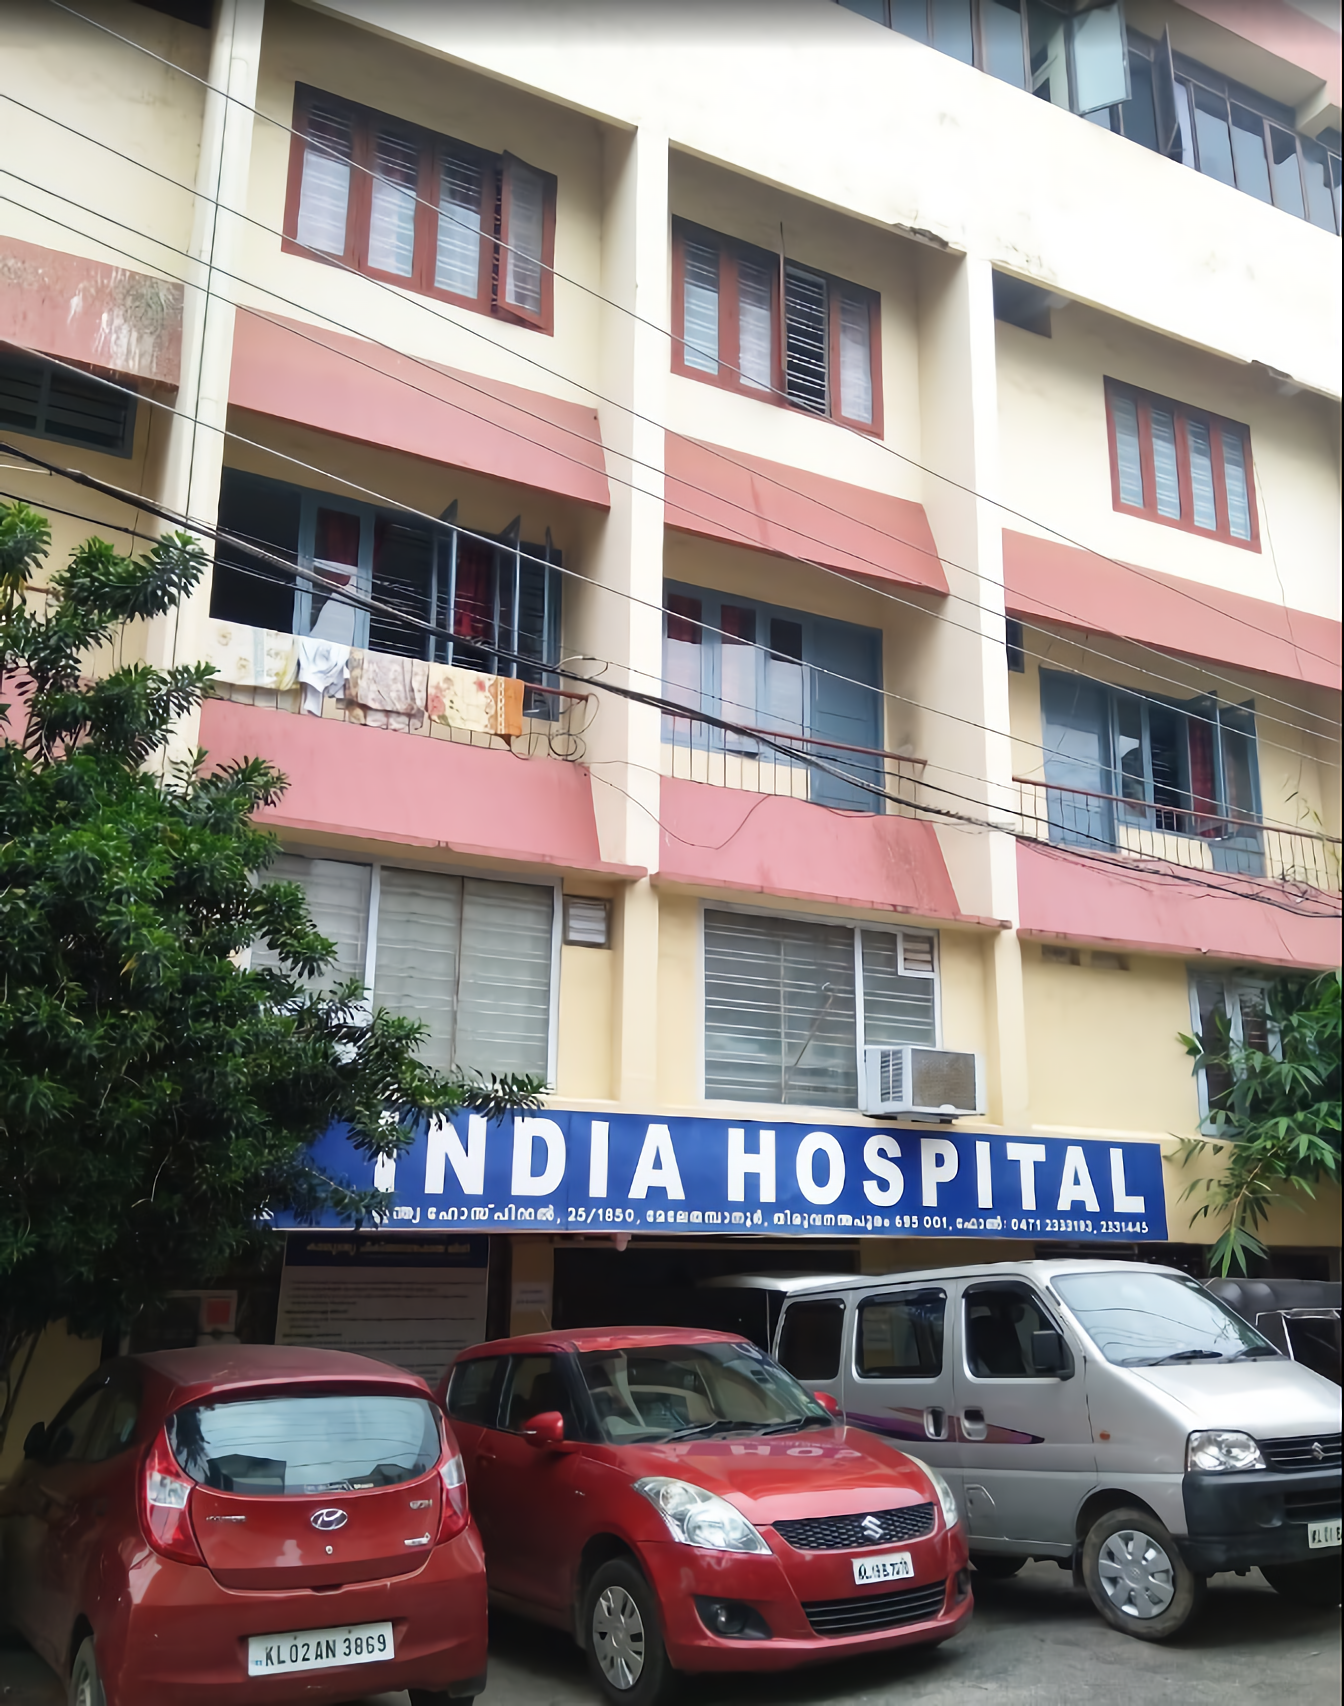 India Hospital photo